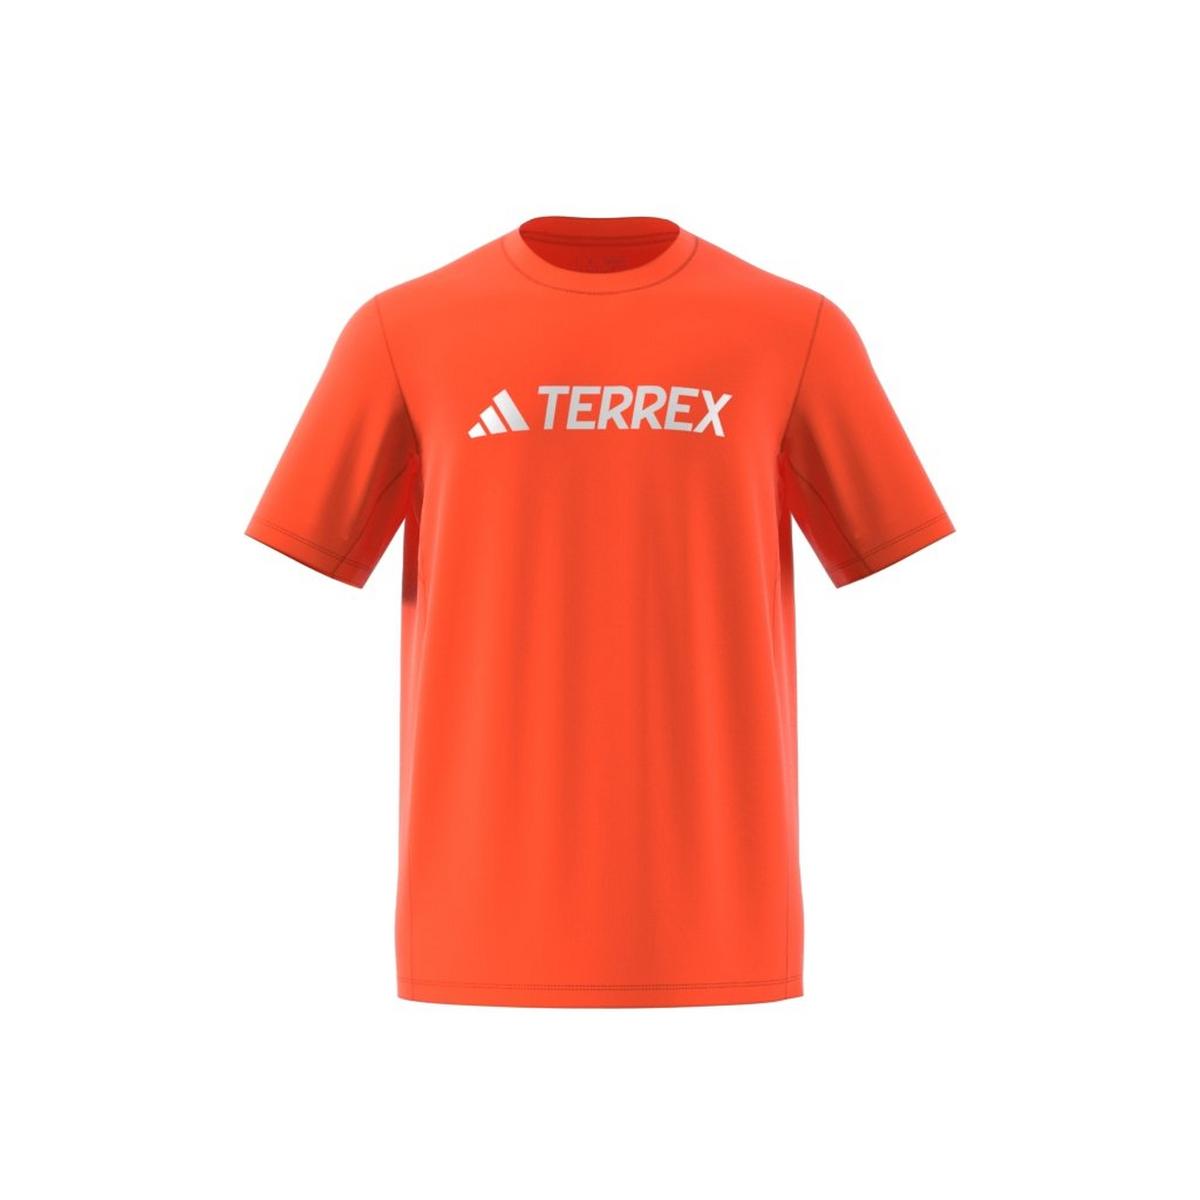 Adidas Terrex Men's Multi Endurance Tech T-shirt - Orange